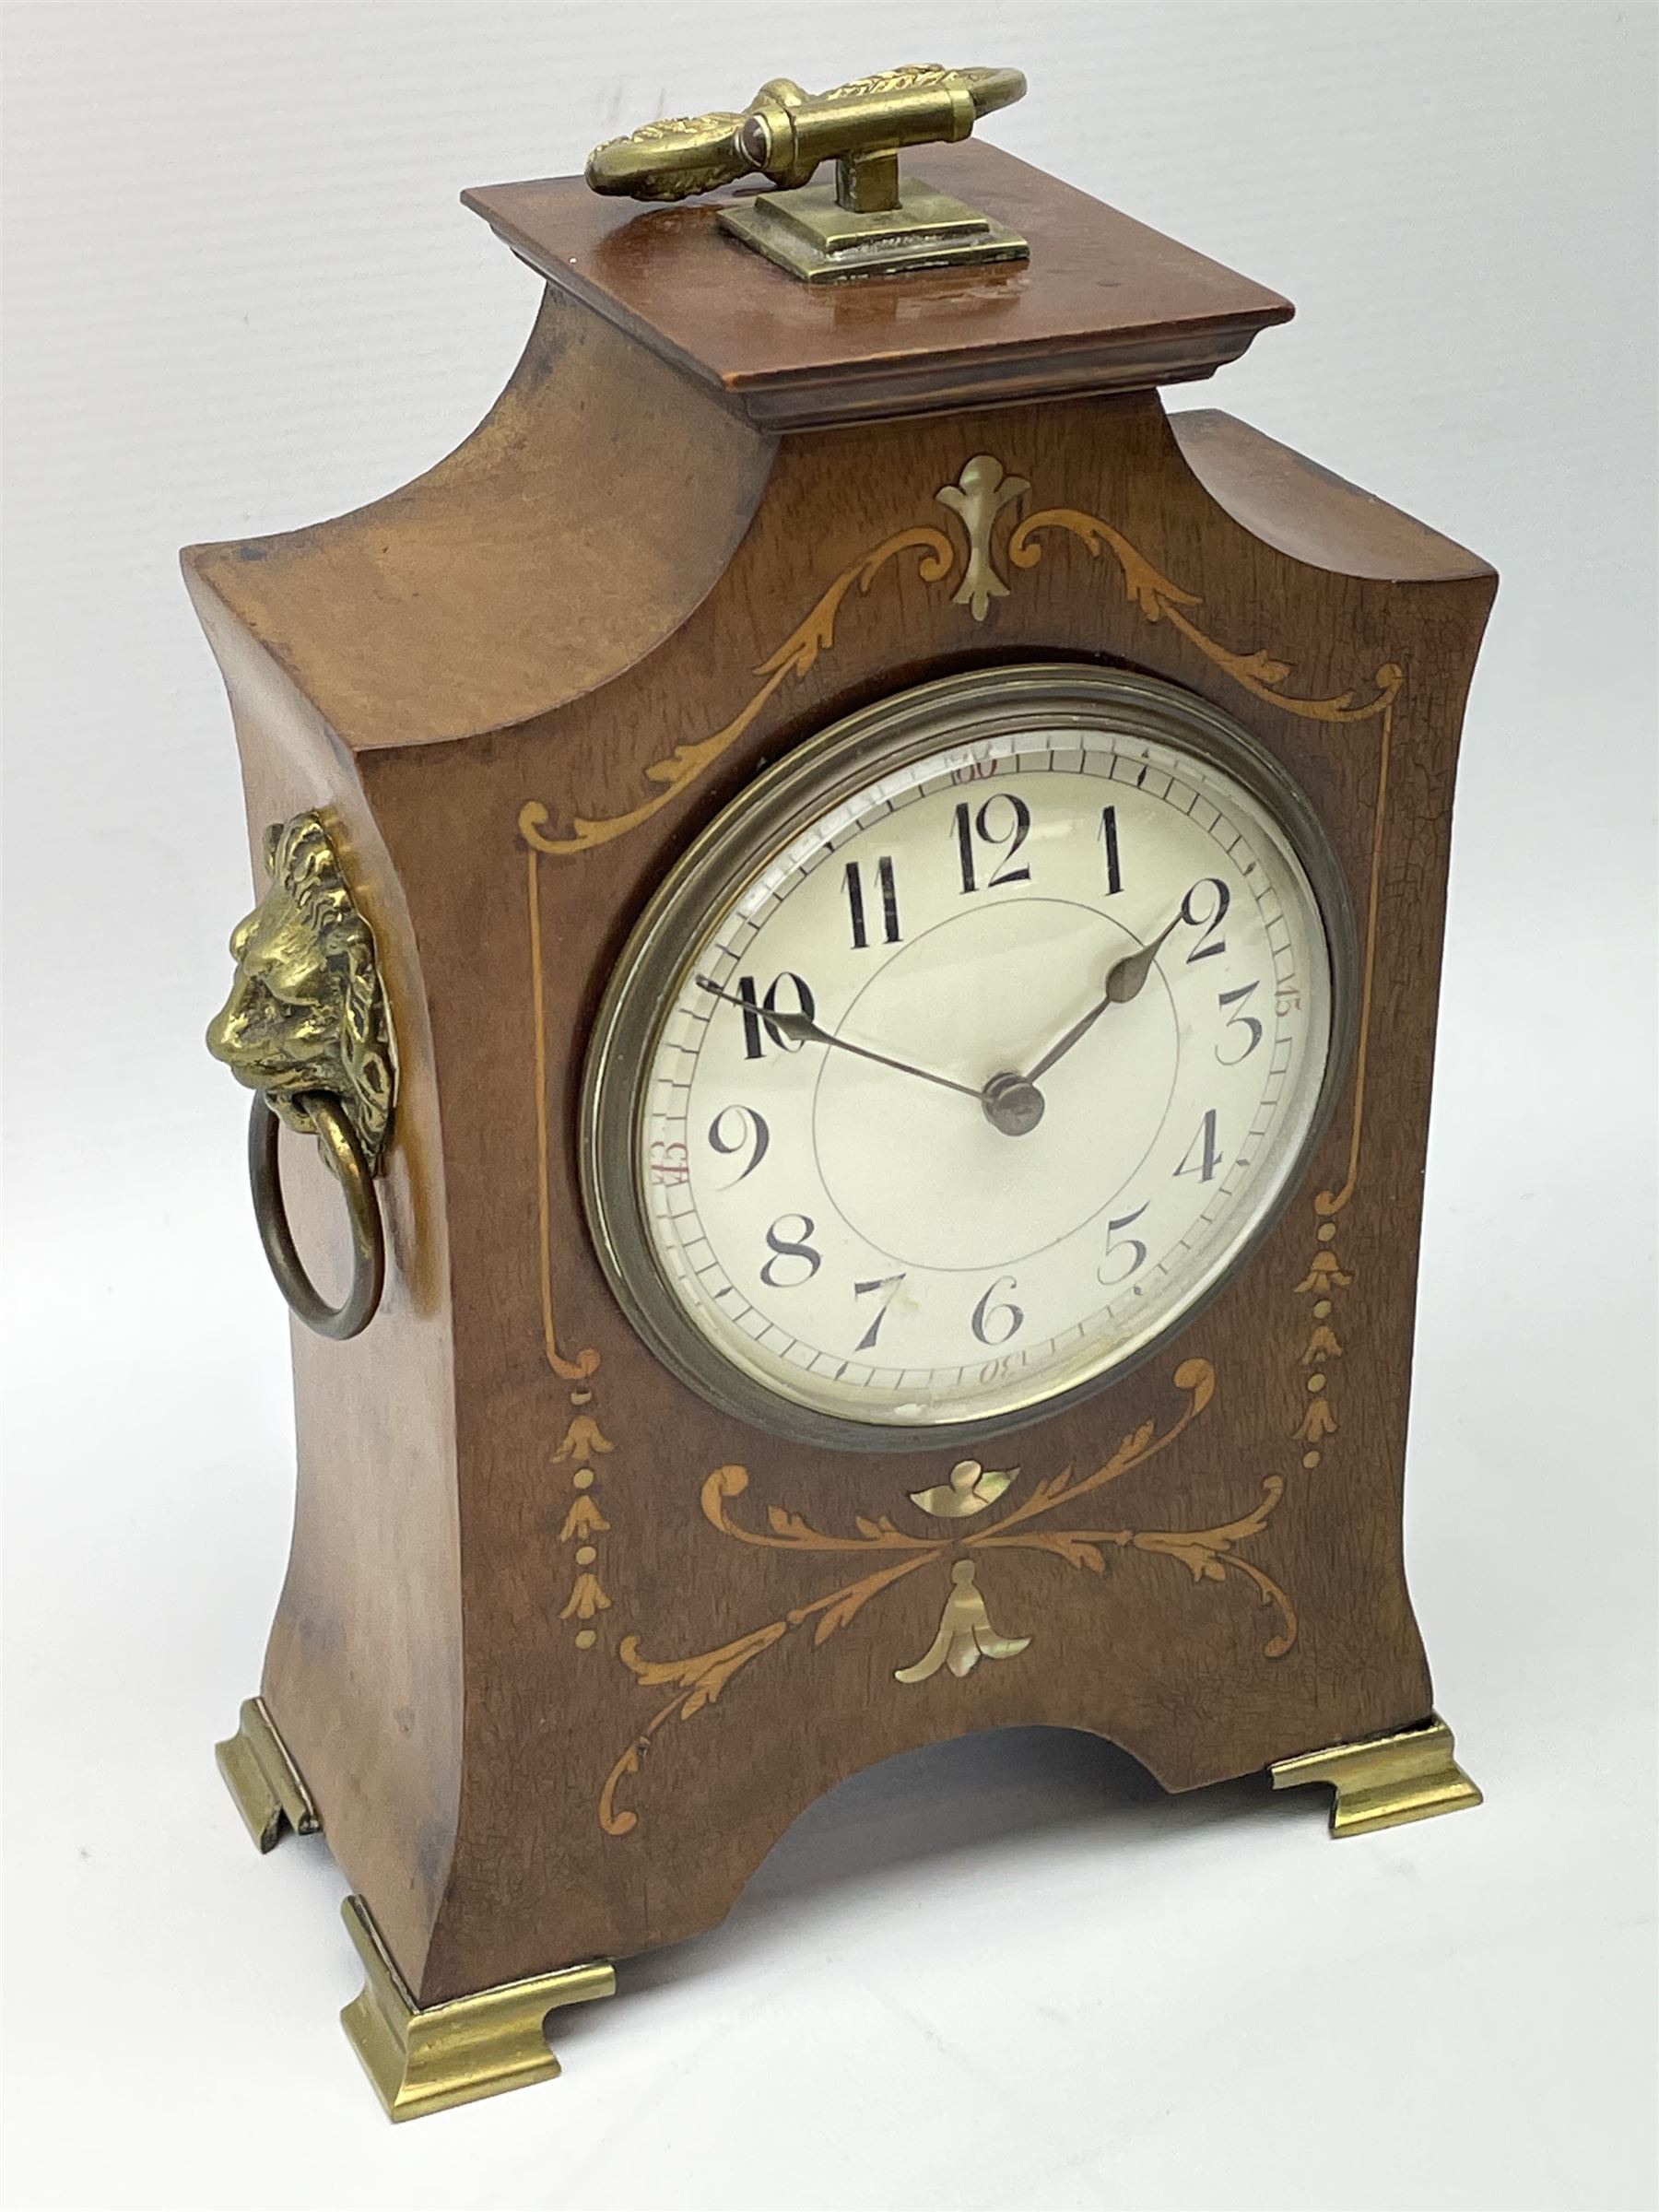 Edwardian mahogany Art Nouveau design boudoir clock c1905 - Image 2 of 7